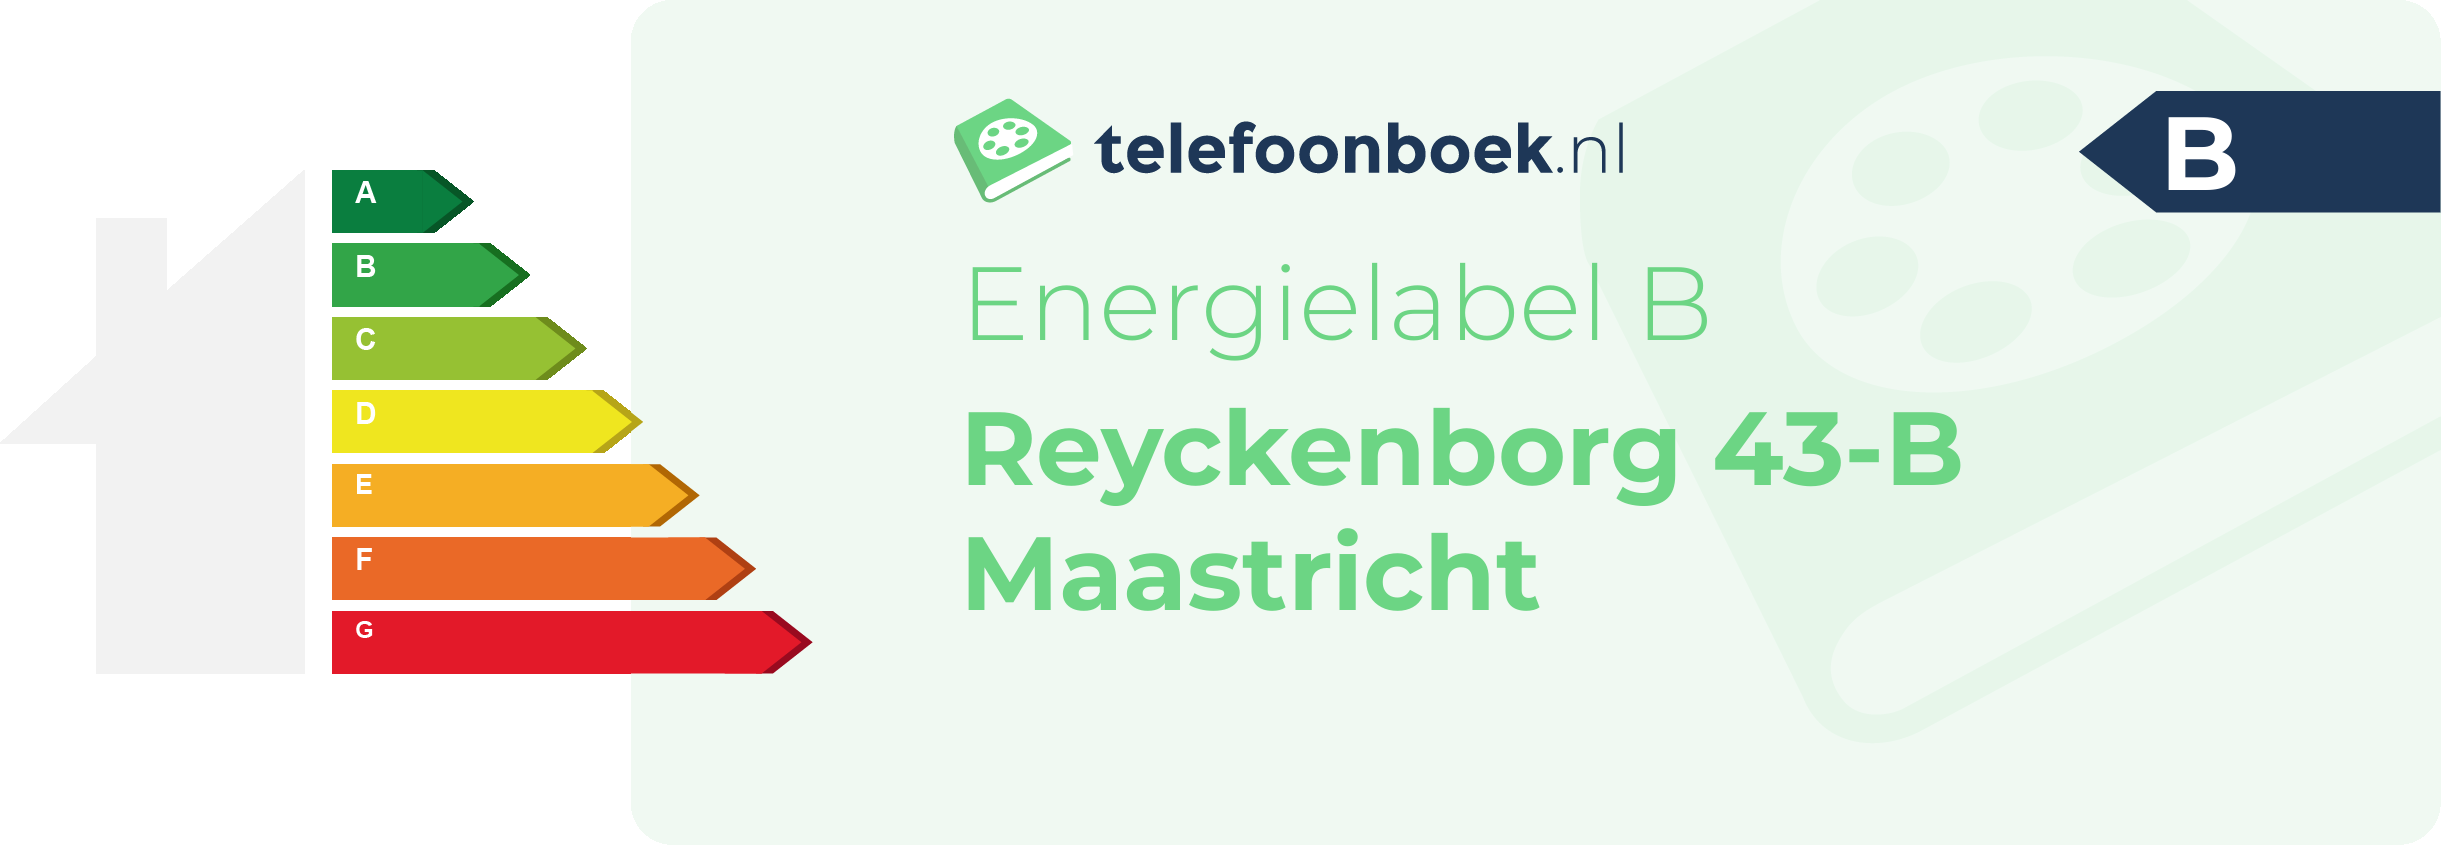 Energielabel Reyckenborg 43-B Maastricht